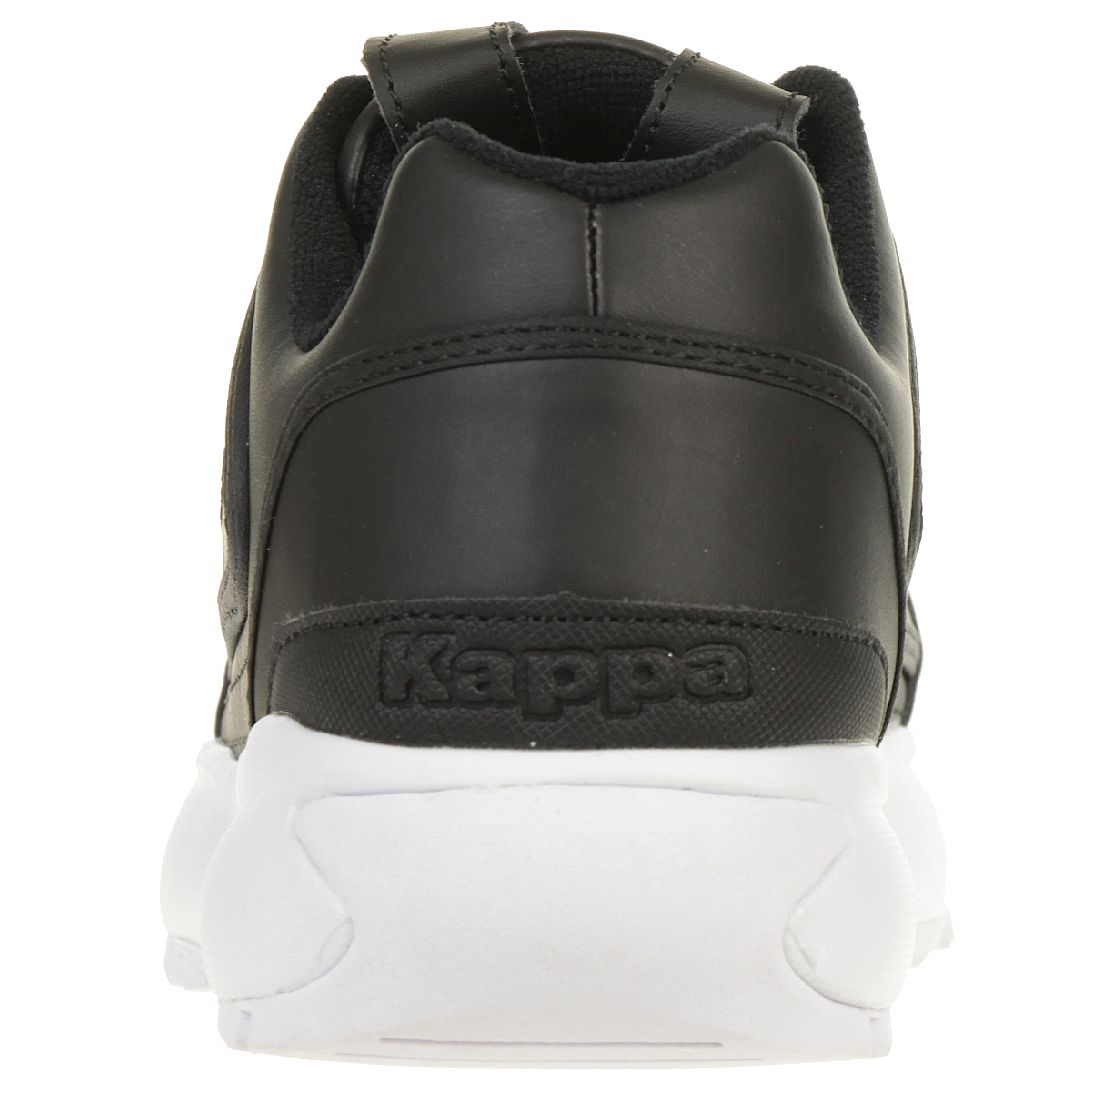 Kappa 242681 Sneaker Damen Turnschuhe Schuhe schwarz